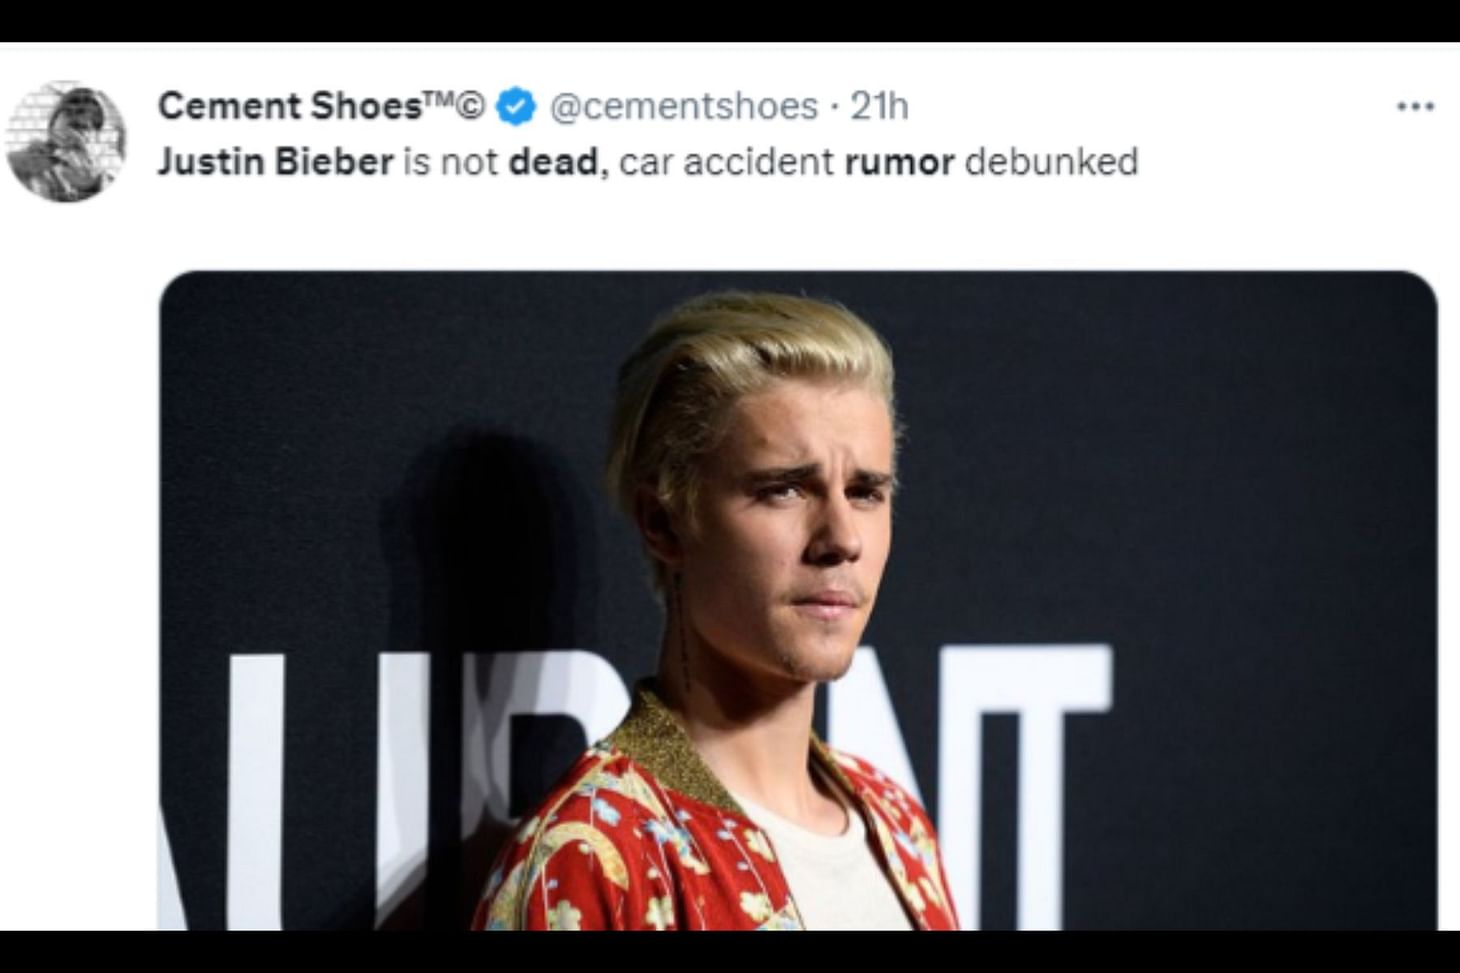 Justin Bieber Fact Check Did Justin Bieber die in a car crash? Viral